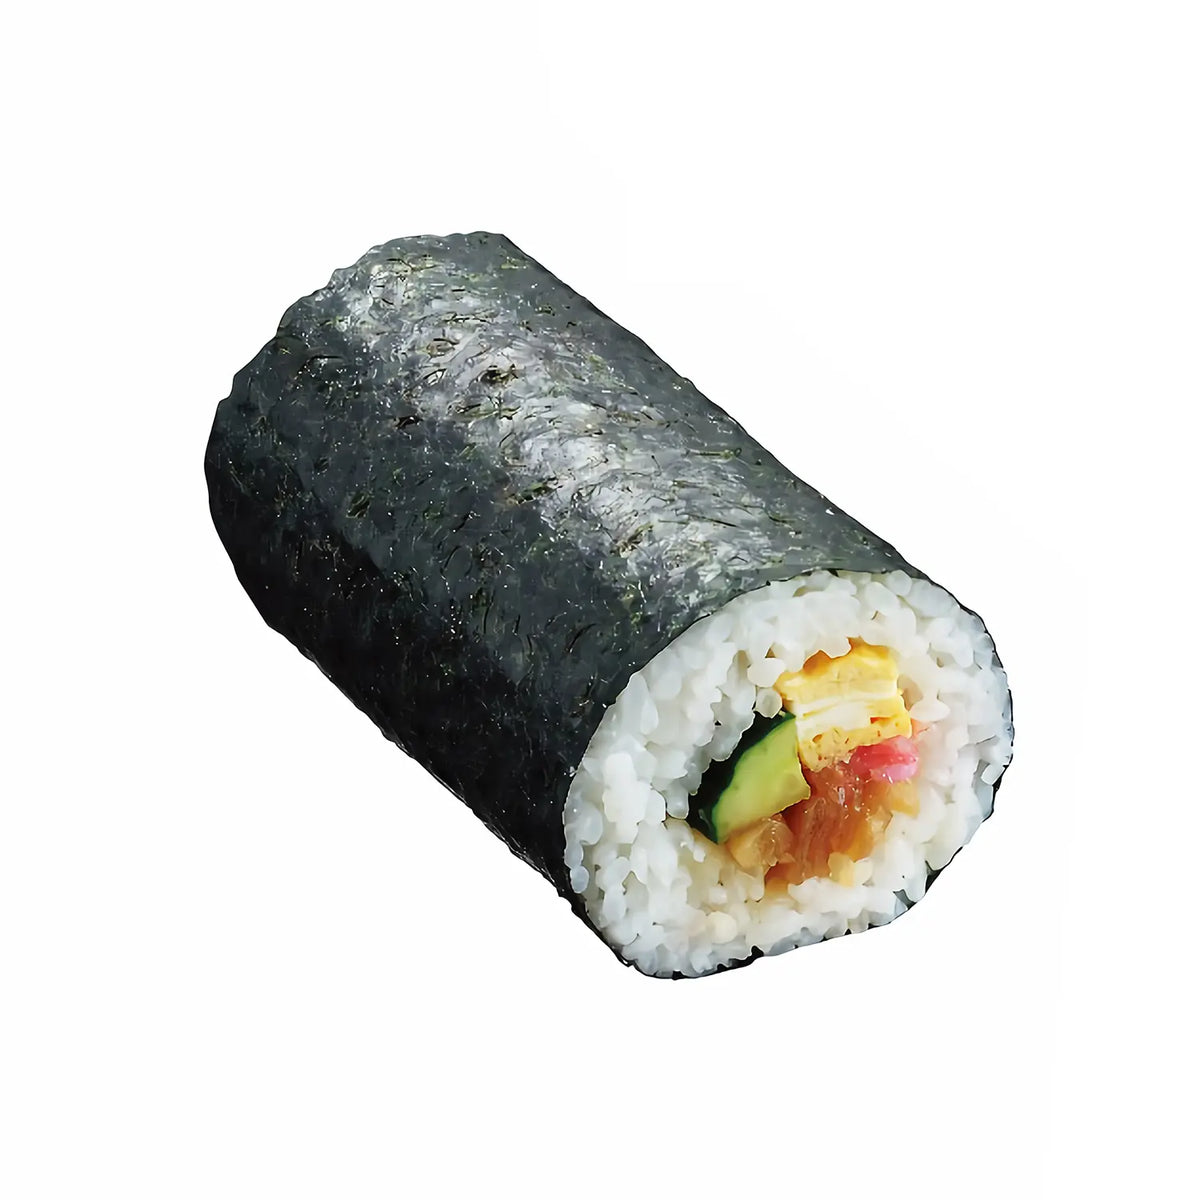 Akebono Polypropylene Thick Sushi Roll Mold Half Size